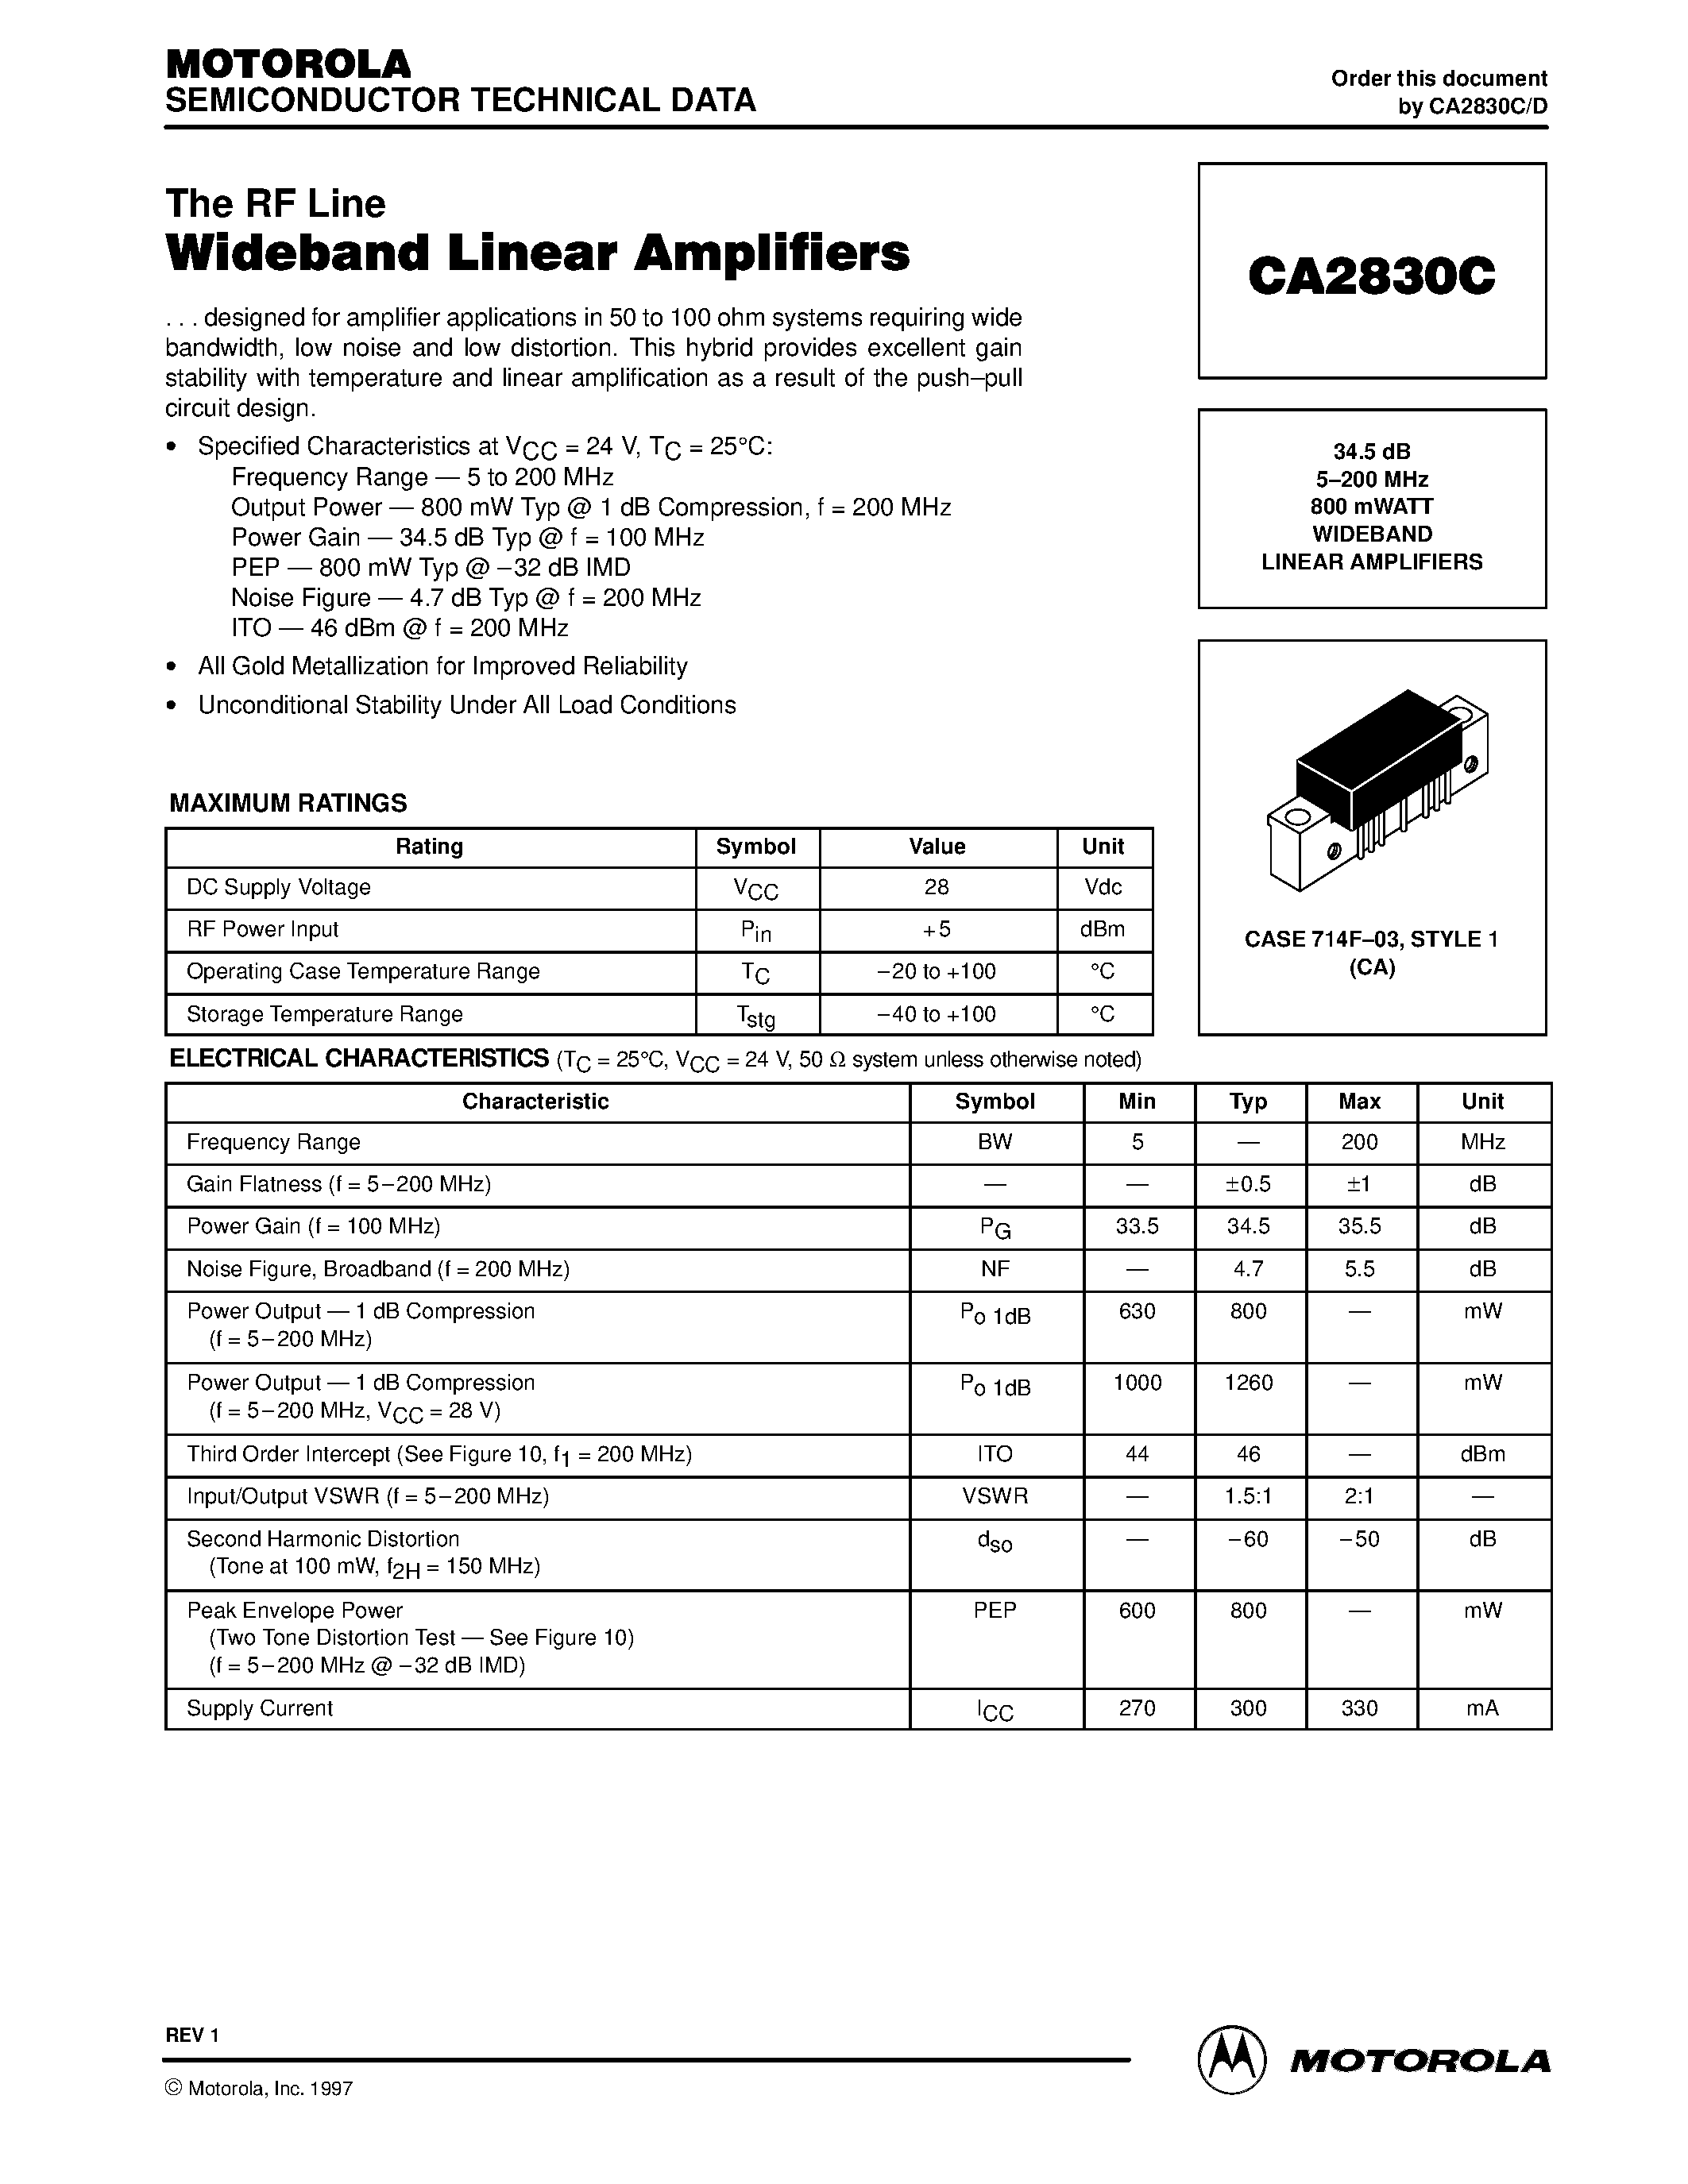 Datasheet CA2830C - 34.5 dB 5-200 MHz 800 mWATT WIDEBAND LINEAR AMPLIFIERS page 1